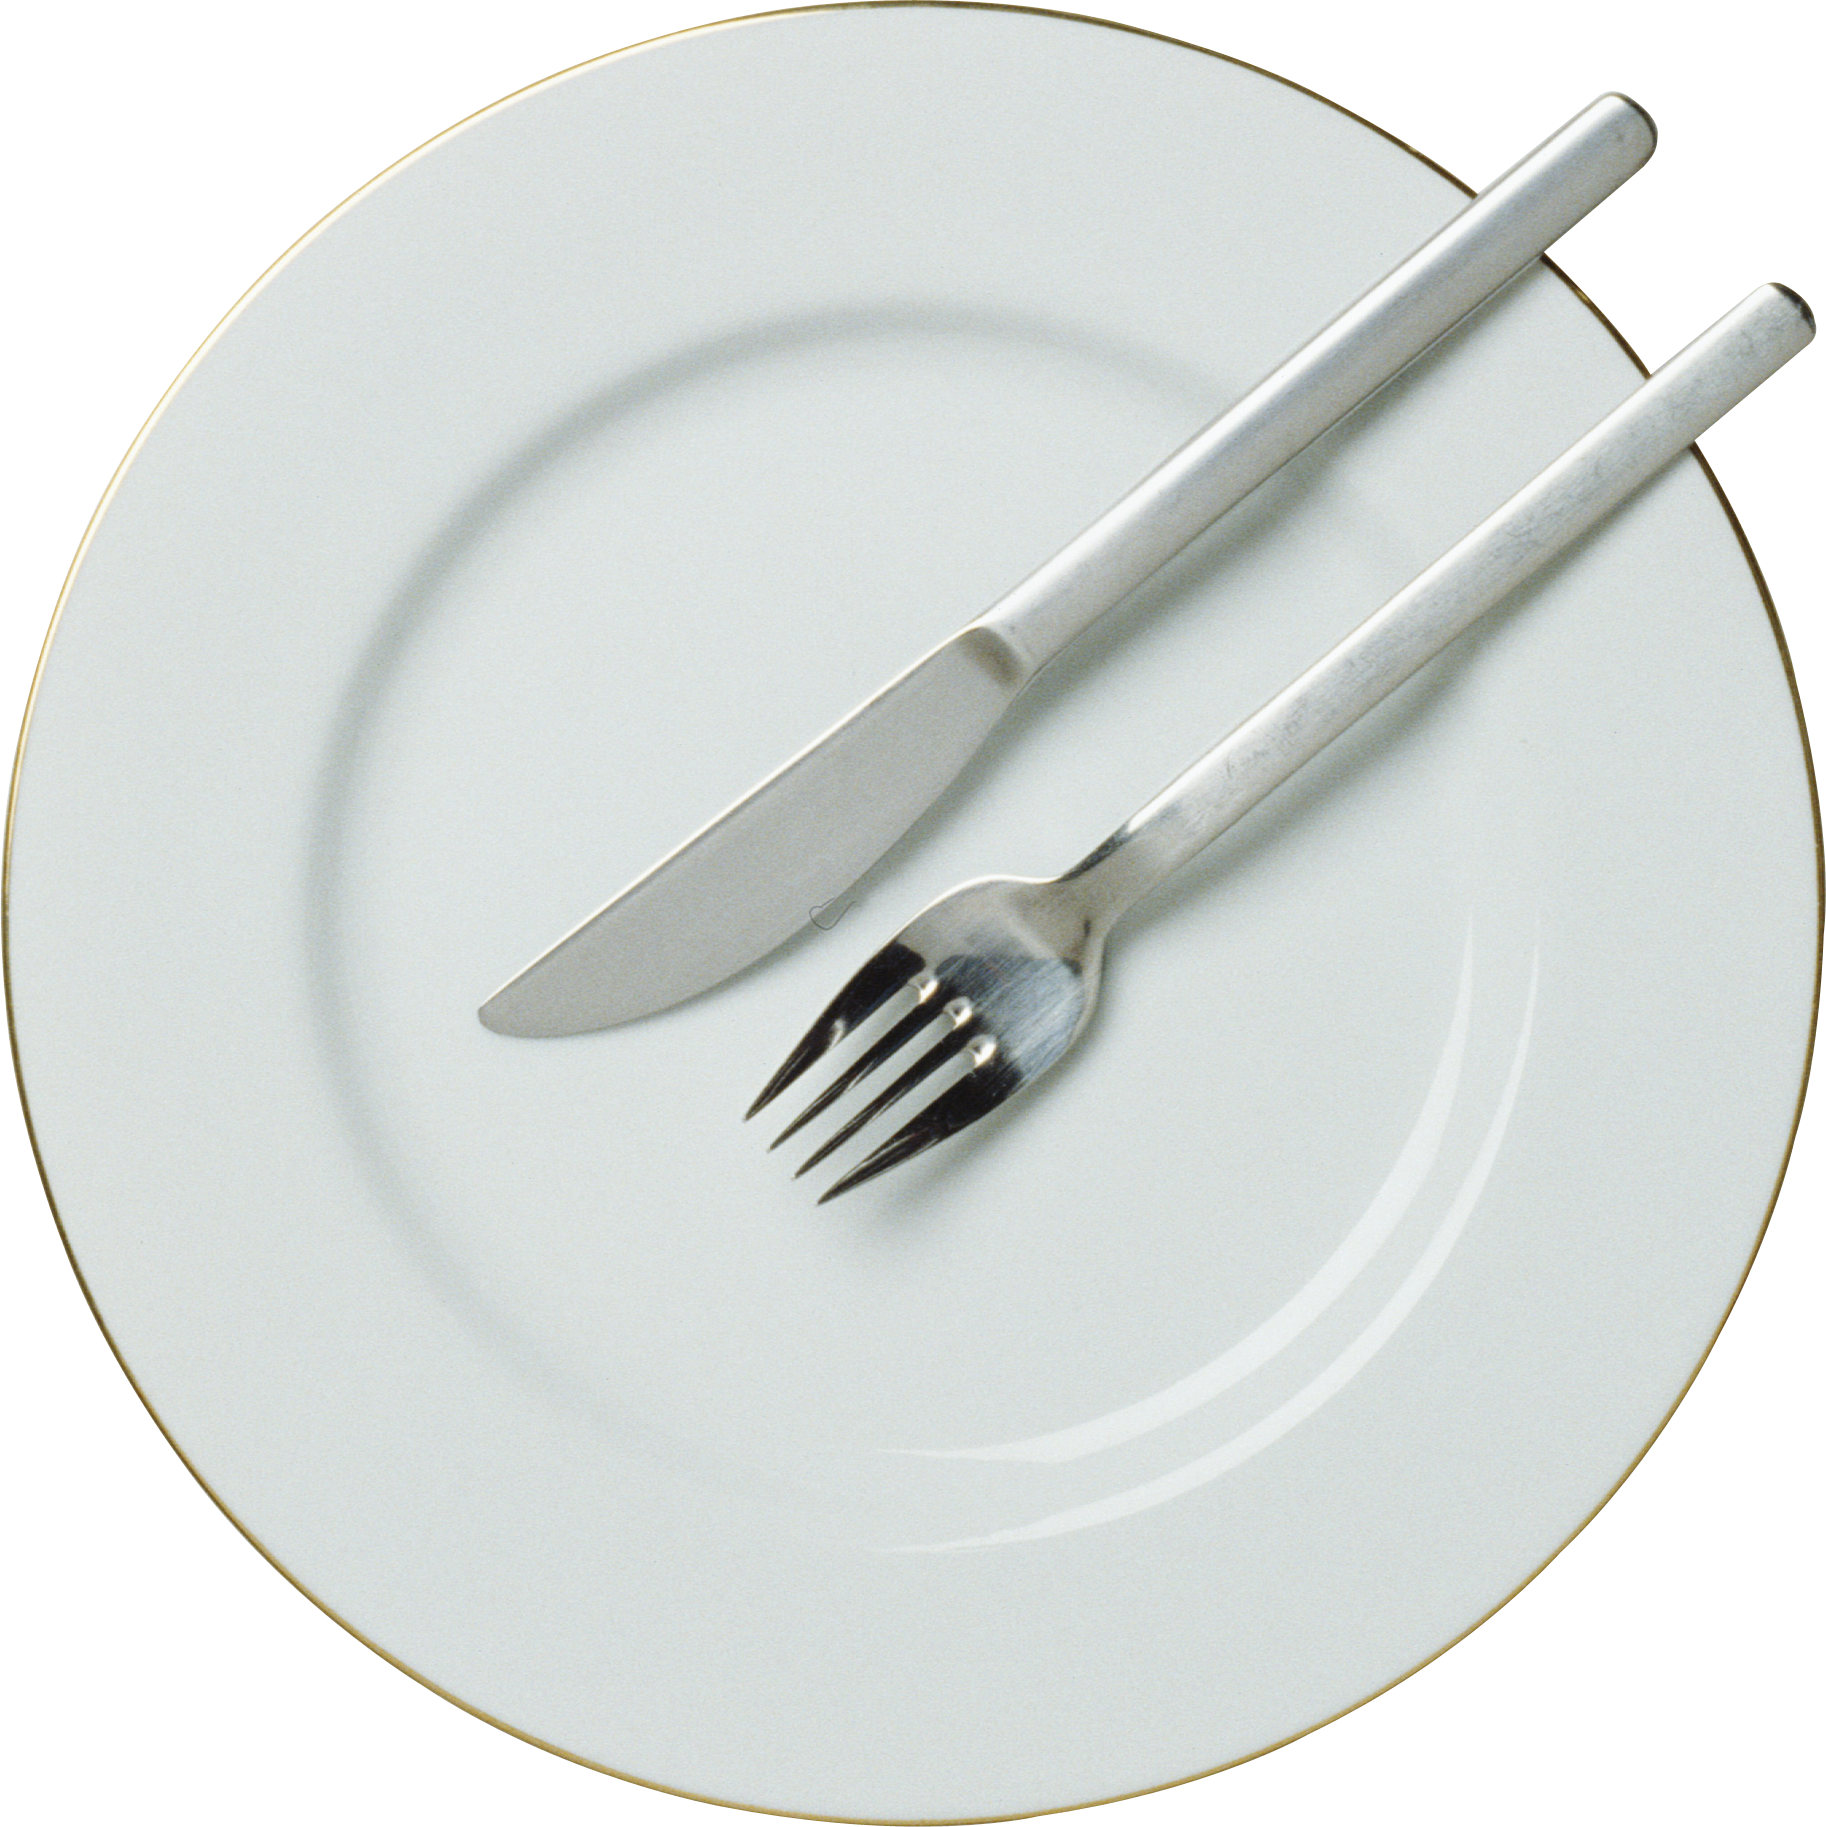 Knife silverware plate